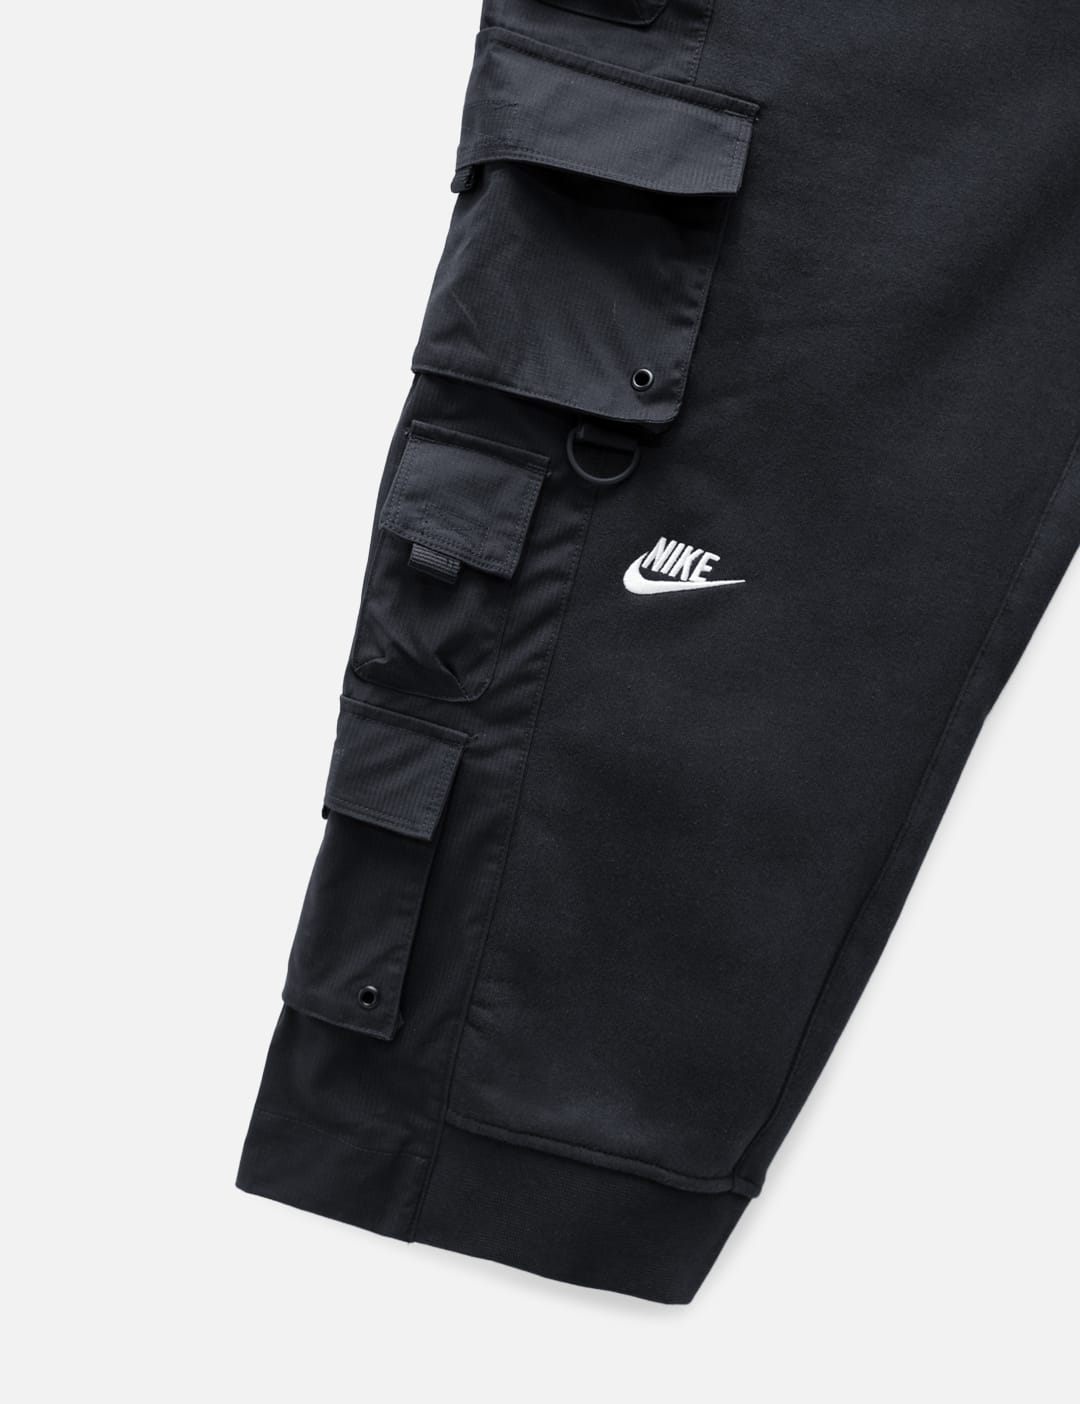 Nike   Nike x PEACEMINUSONE Wide Trousers   HBX   Globally Curated